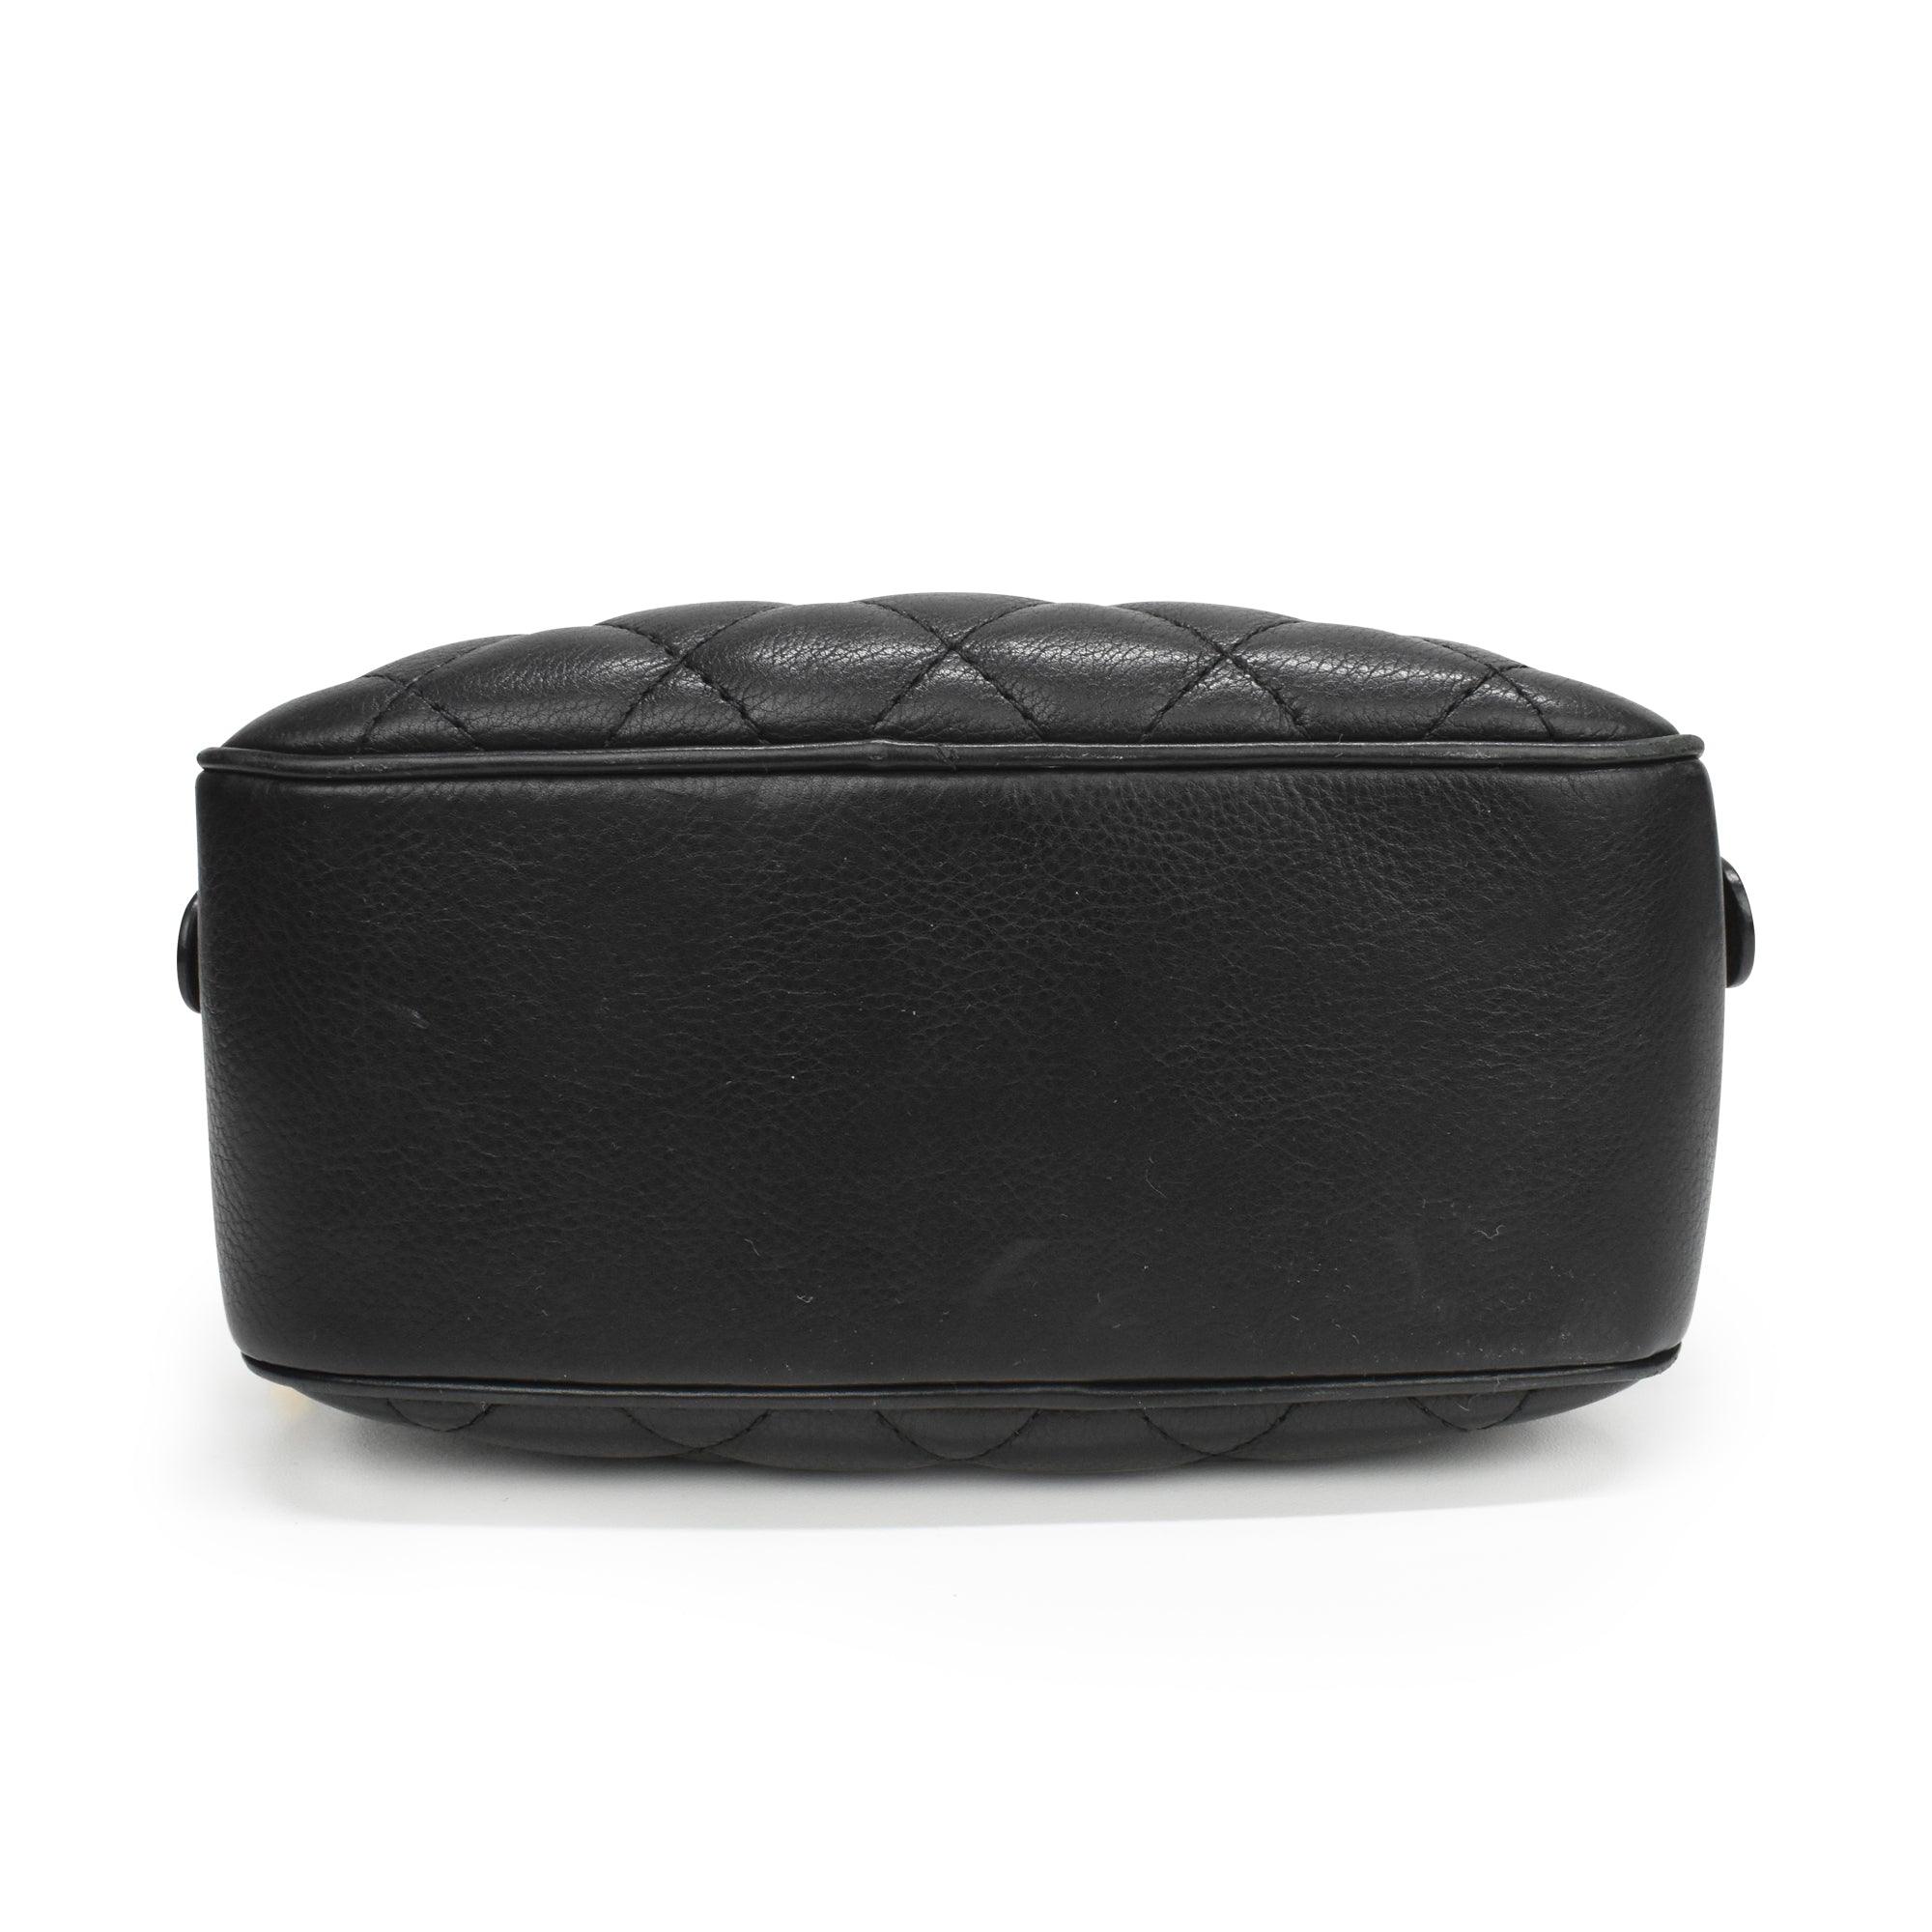 Chanel Vanity Handbag - Fashionably Yours